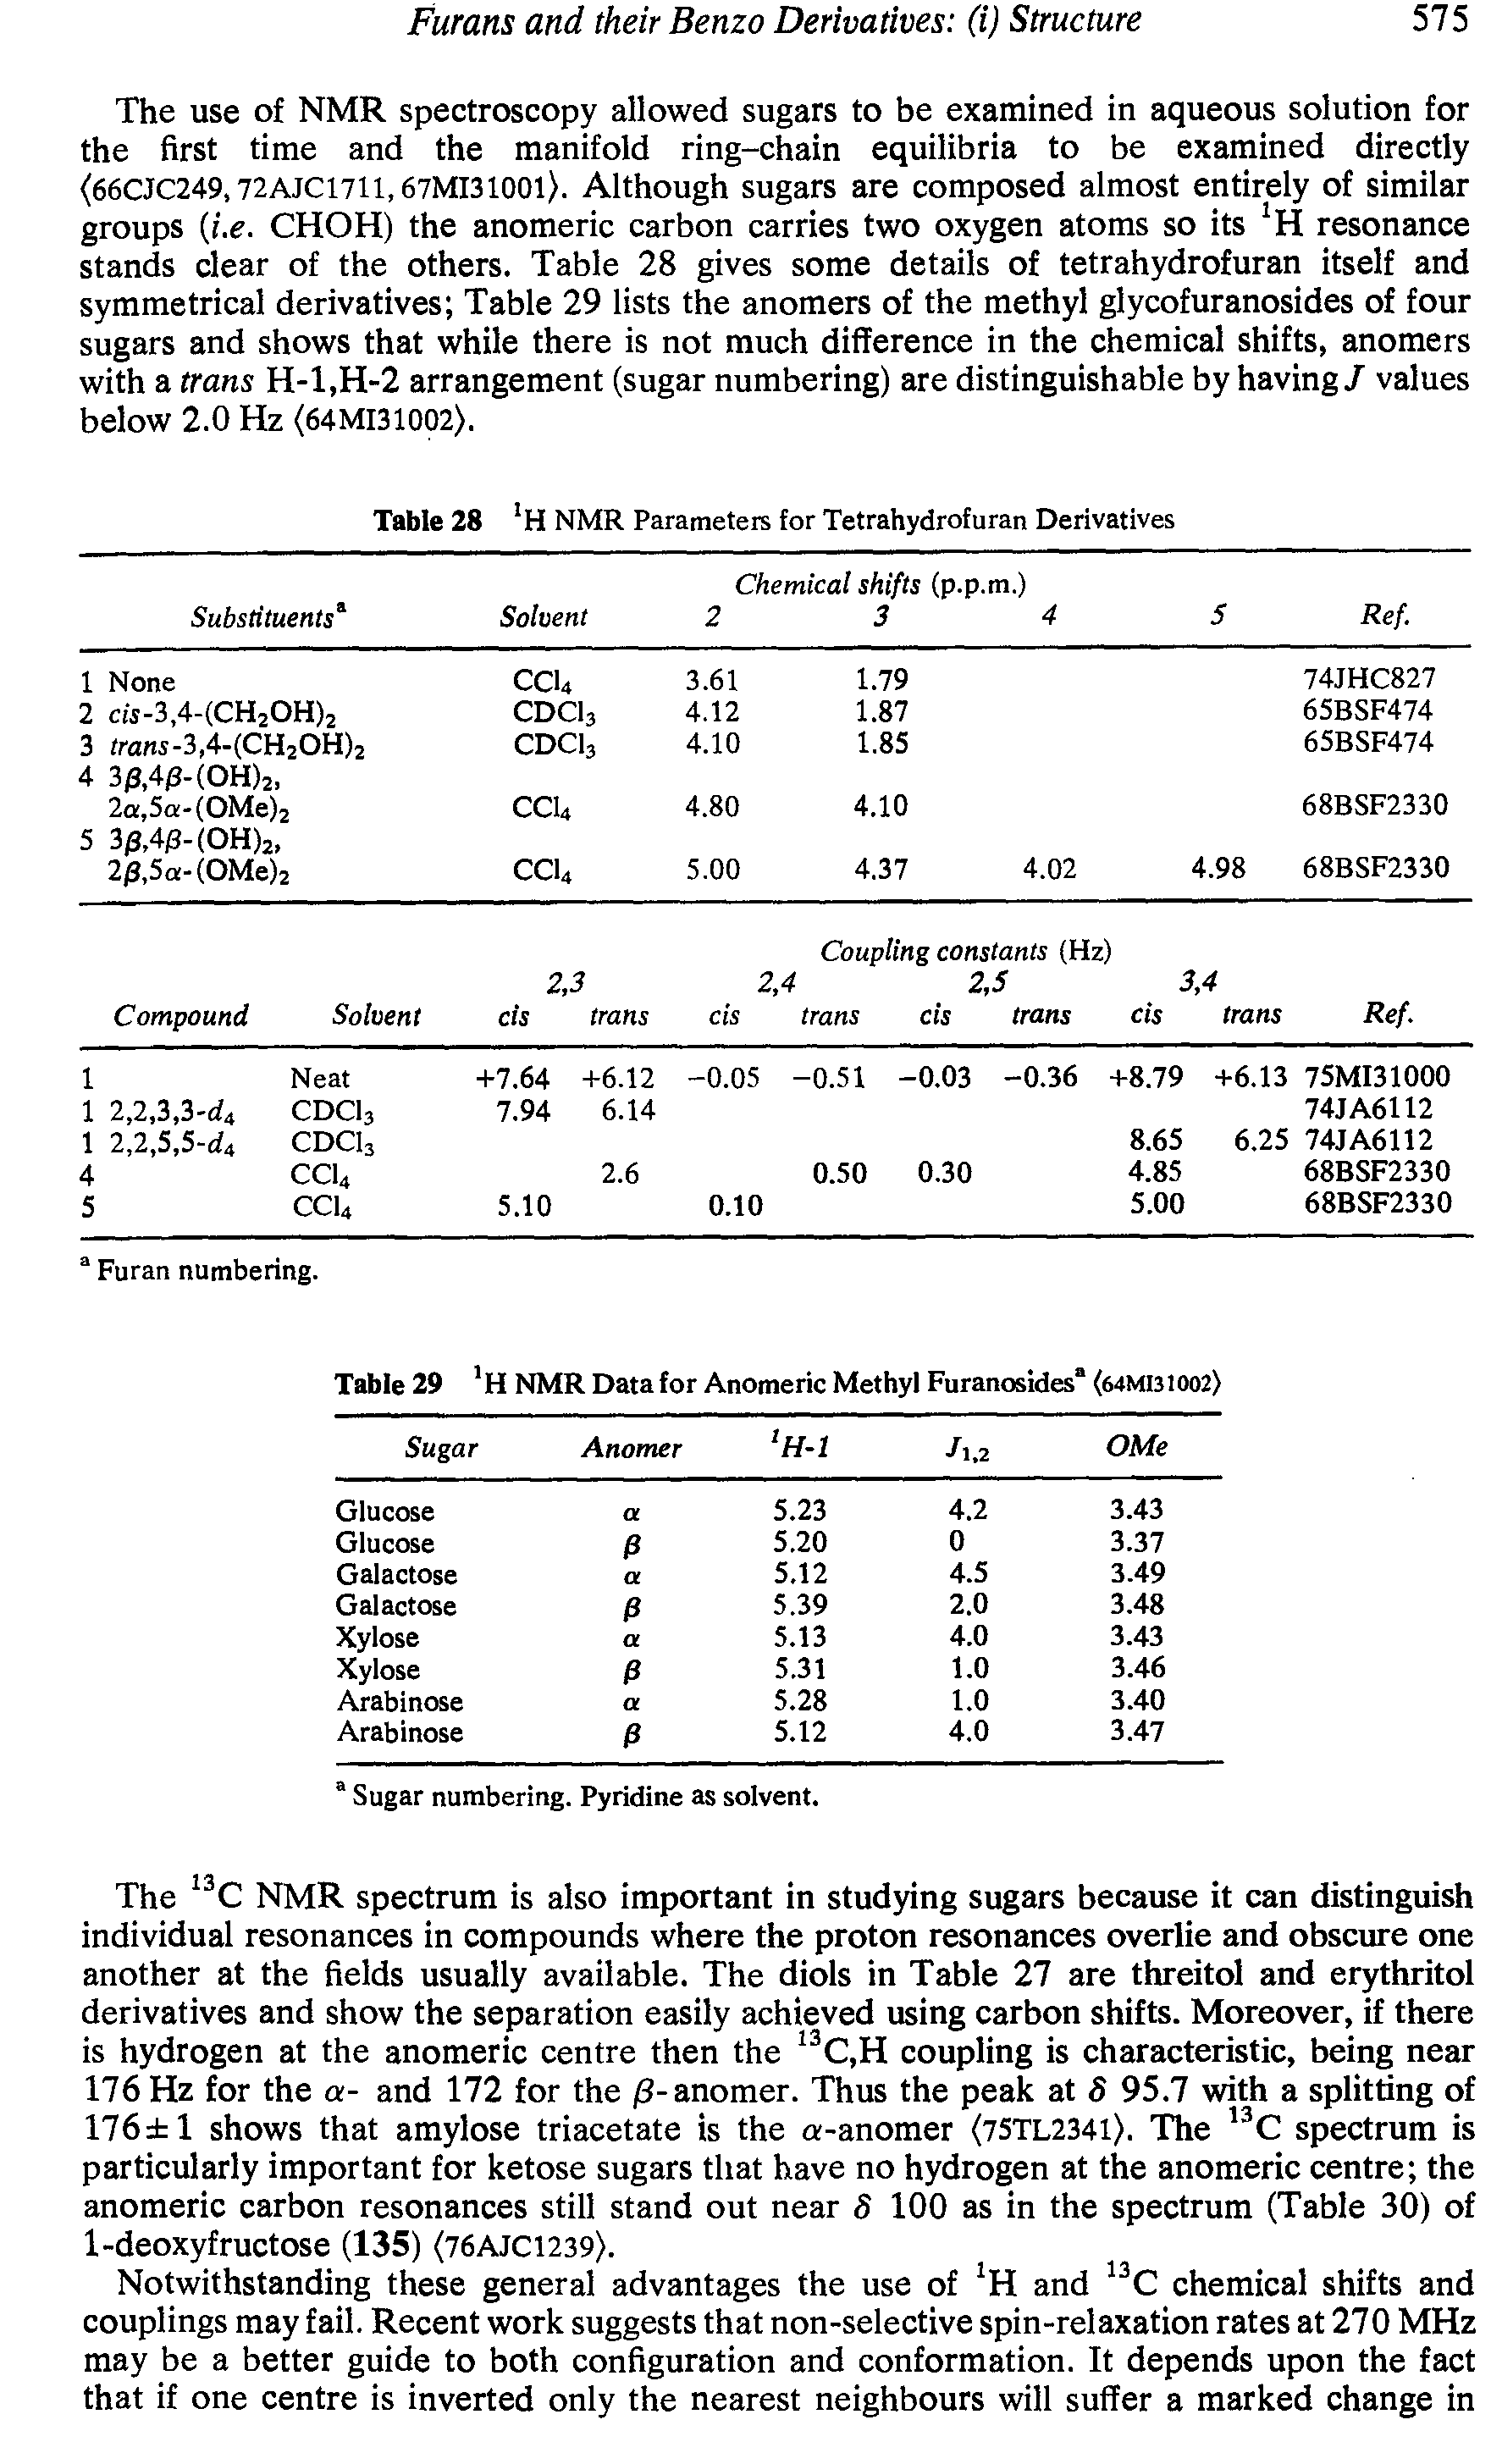 Table 29 H NMR Data for Anomeric Methyl Furanosides" (64MI31002)...